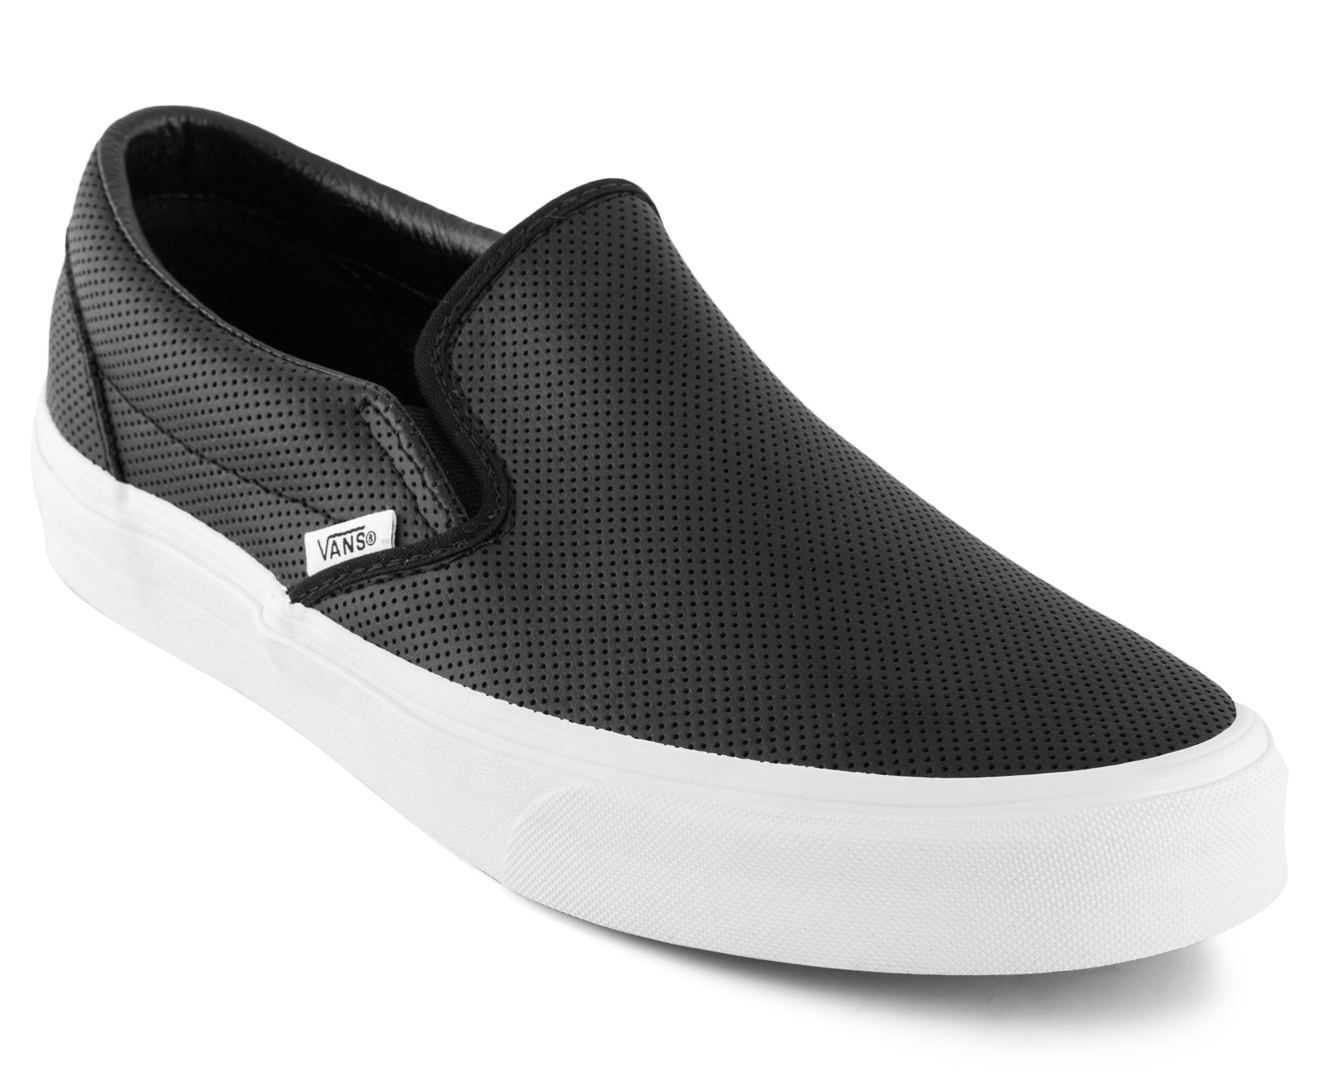 Vans Unisex Classic Slip-On Shoe - Black | Catch.com.au